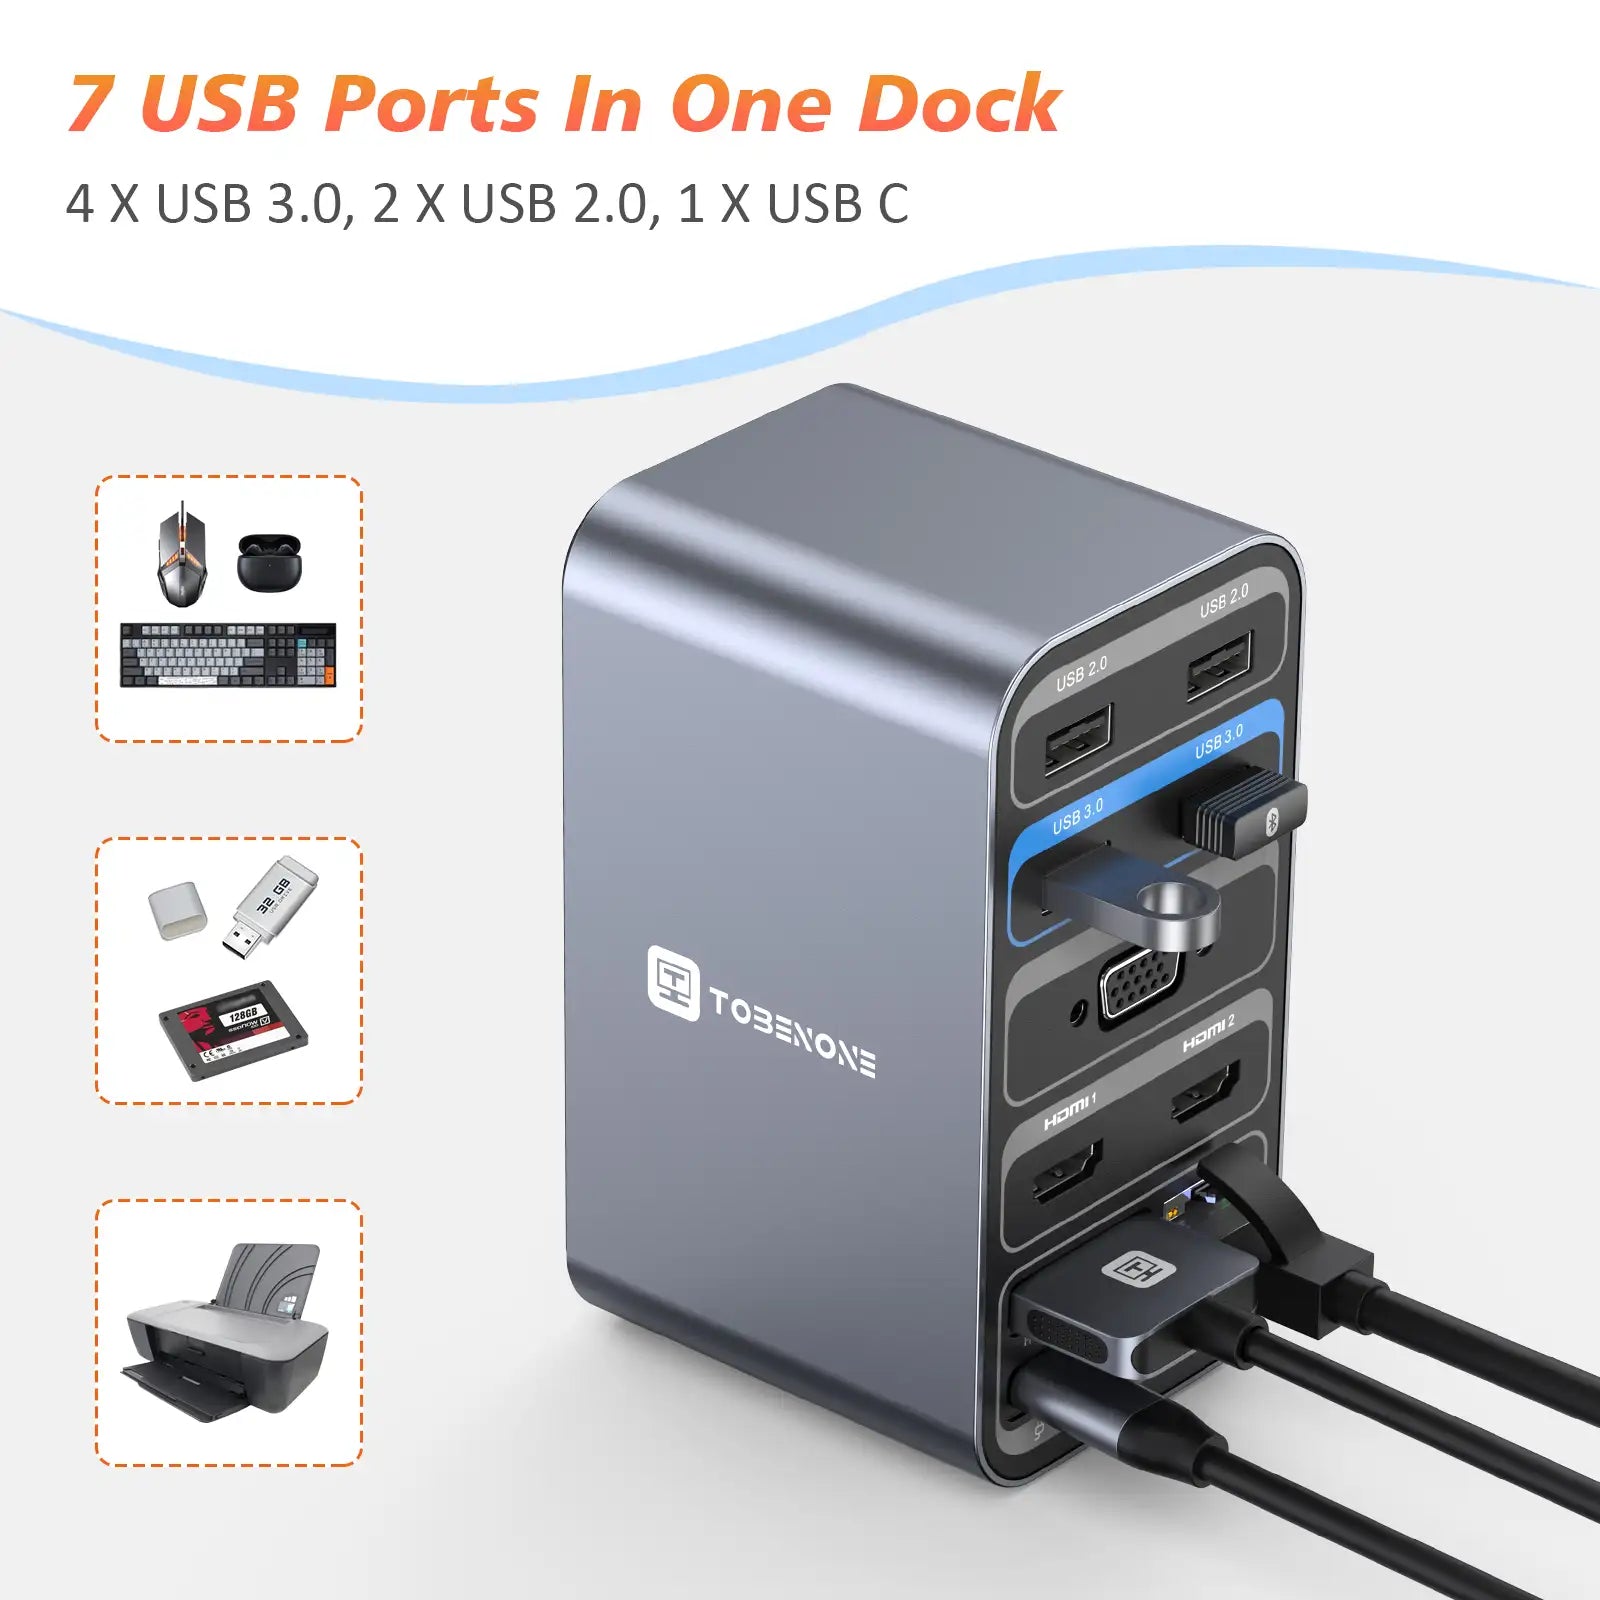 UDS009 MacBook Docking Station 7 USB Ports In One Dock